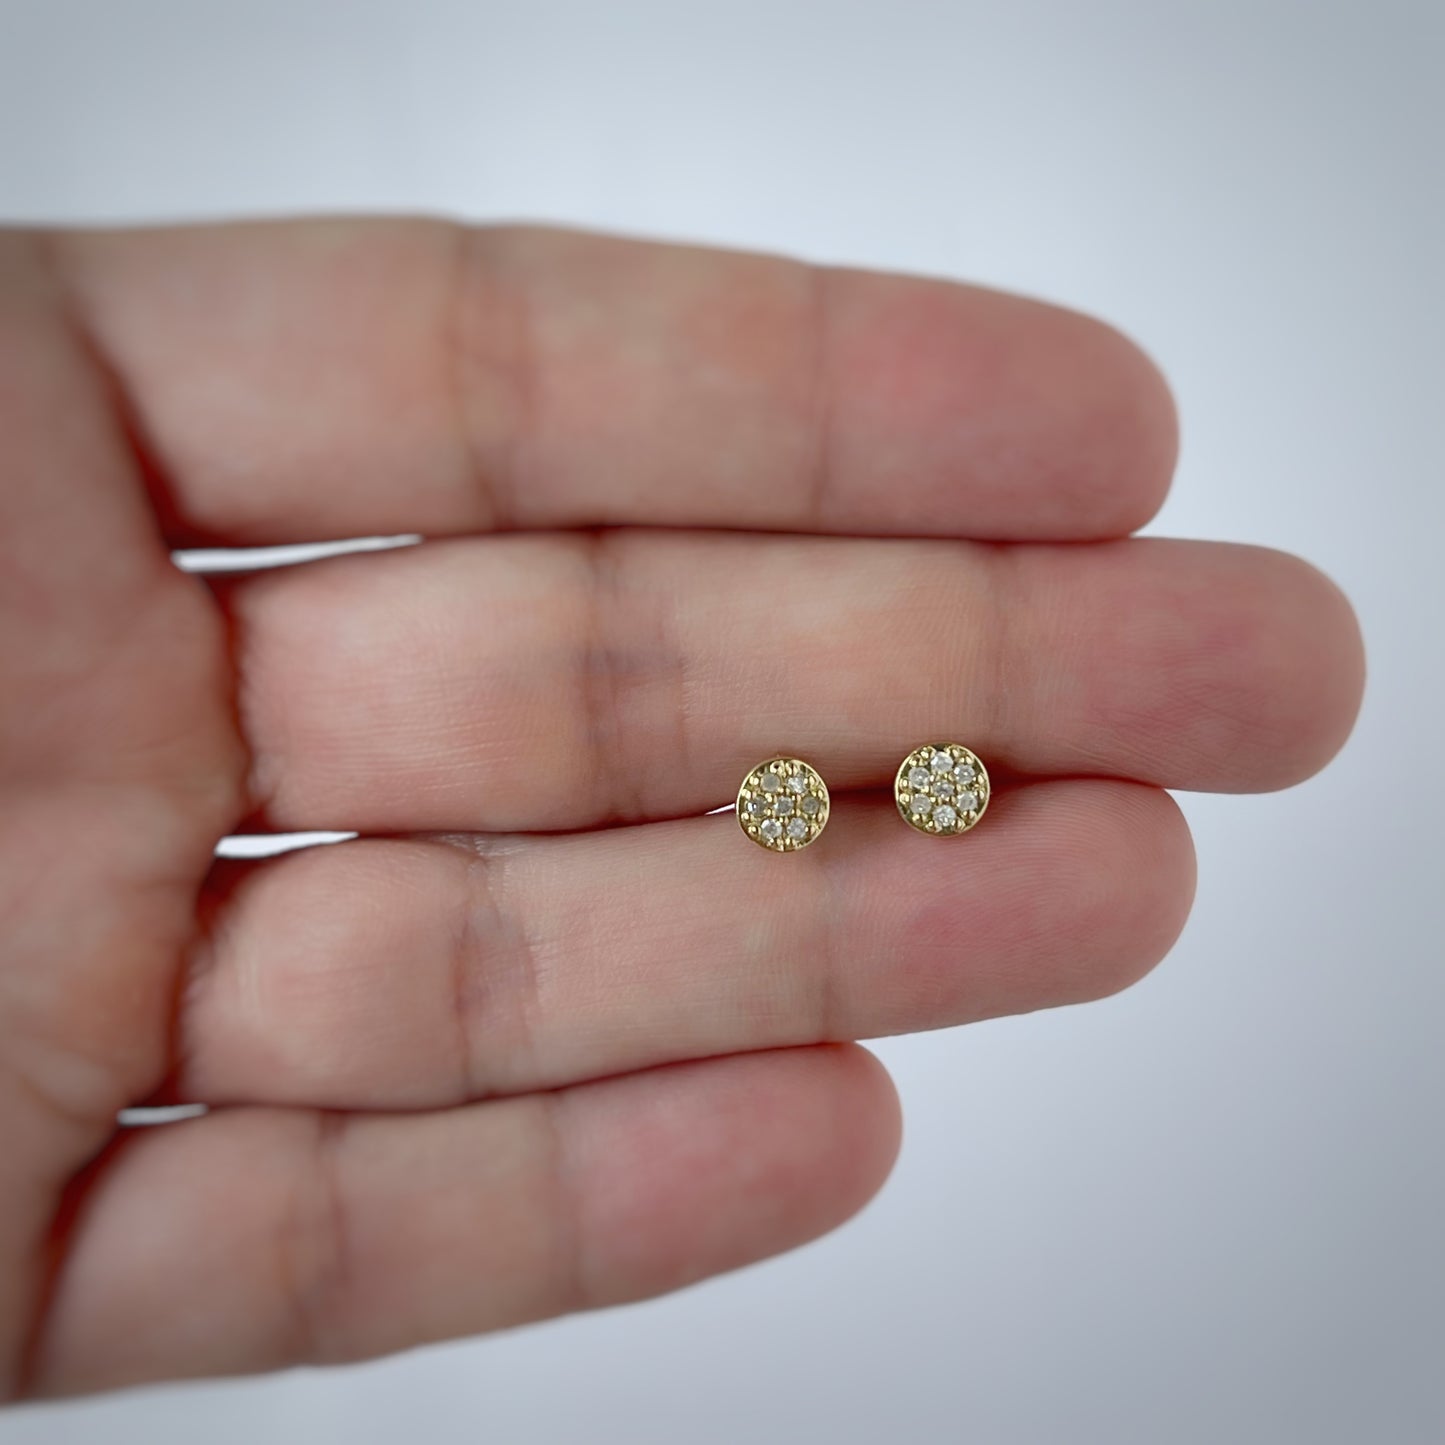 Aretes mini círculos de oro amarillo 10k con diamantes 0.08ctw